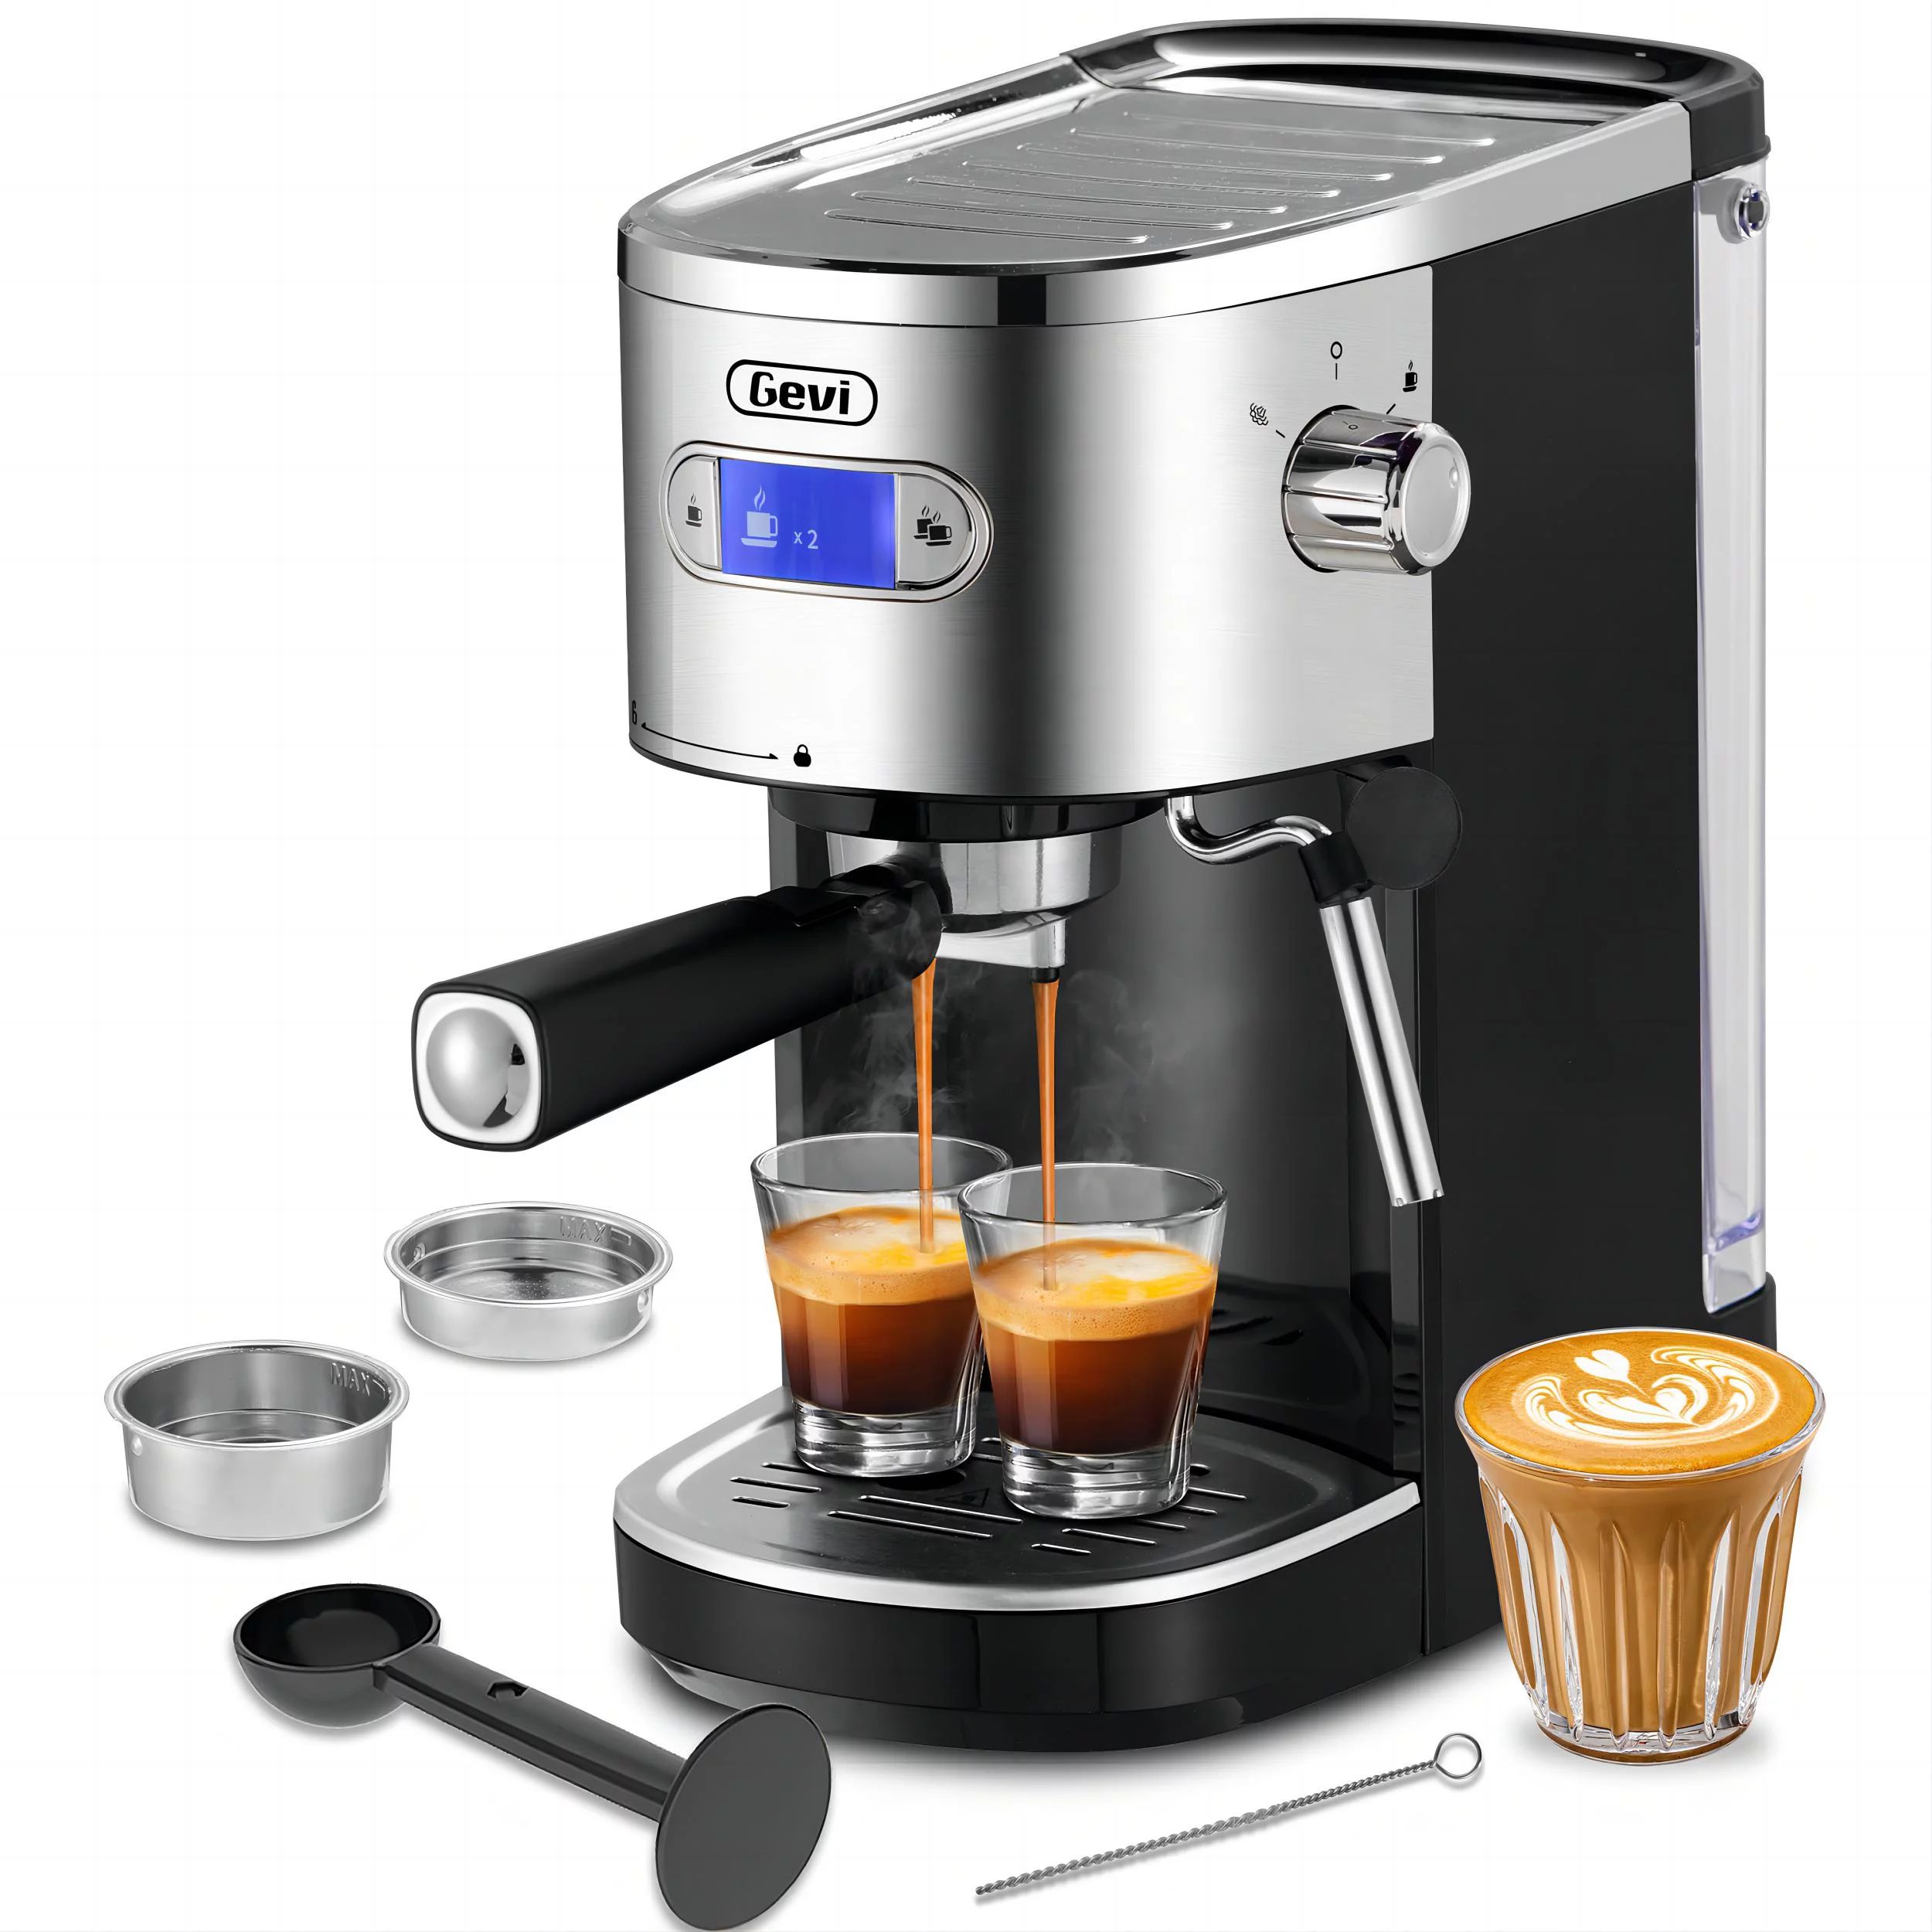 Gevi Espresso Machines 20 Bar Fast Heating Automatic Coffee Machine with Milk Frother Steam Wand | Walmart (US)